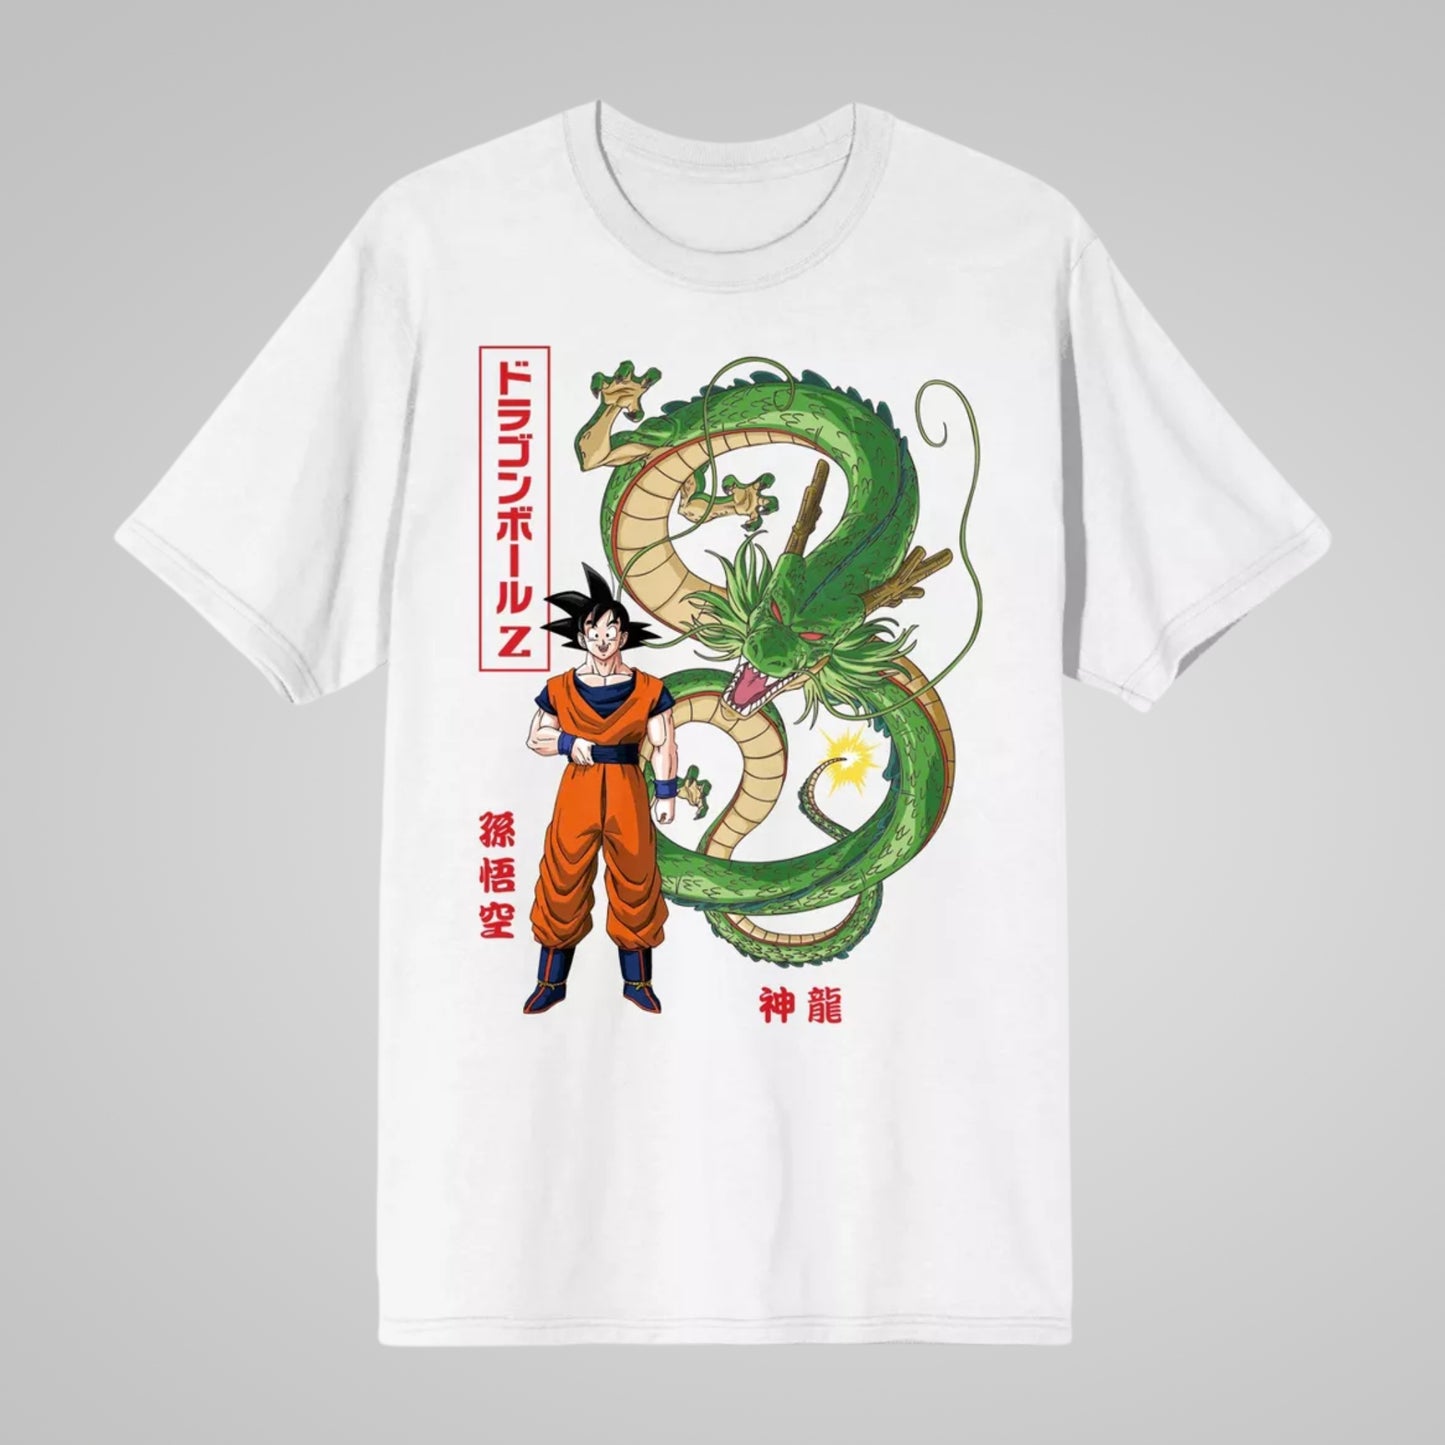 Shenron and Goku (Dragon Ball Z) Unisex Shirt